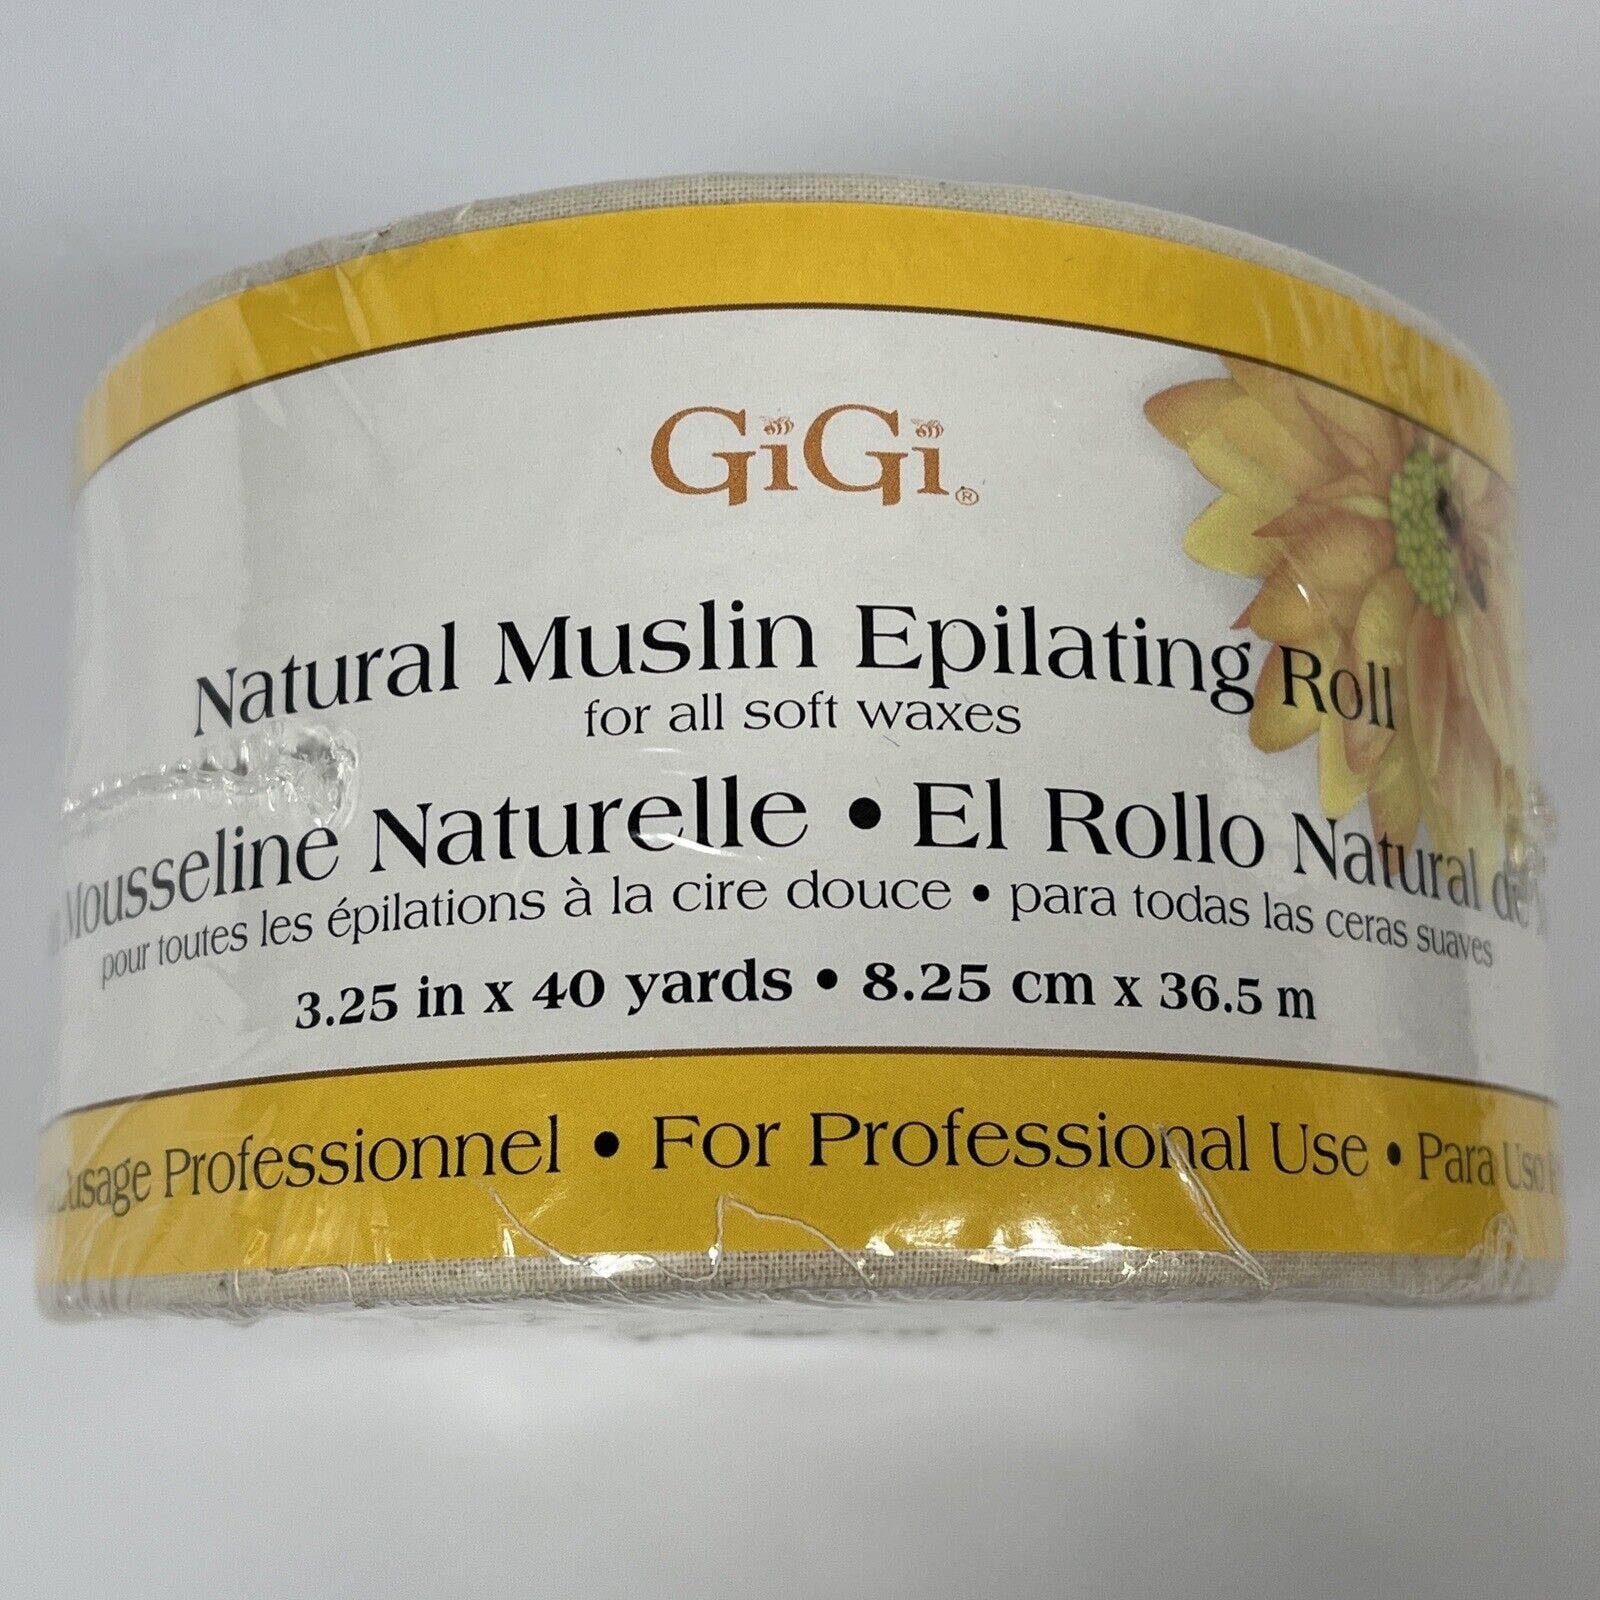 GIGI Natural Muslin Epilating For Soft Waxes Roll 3.25 